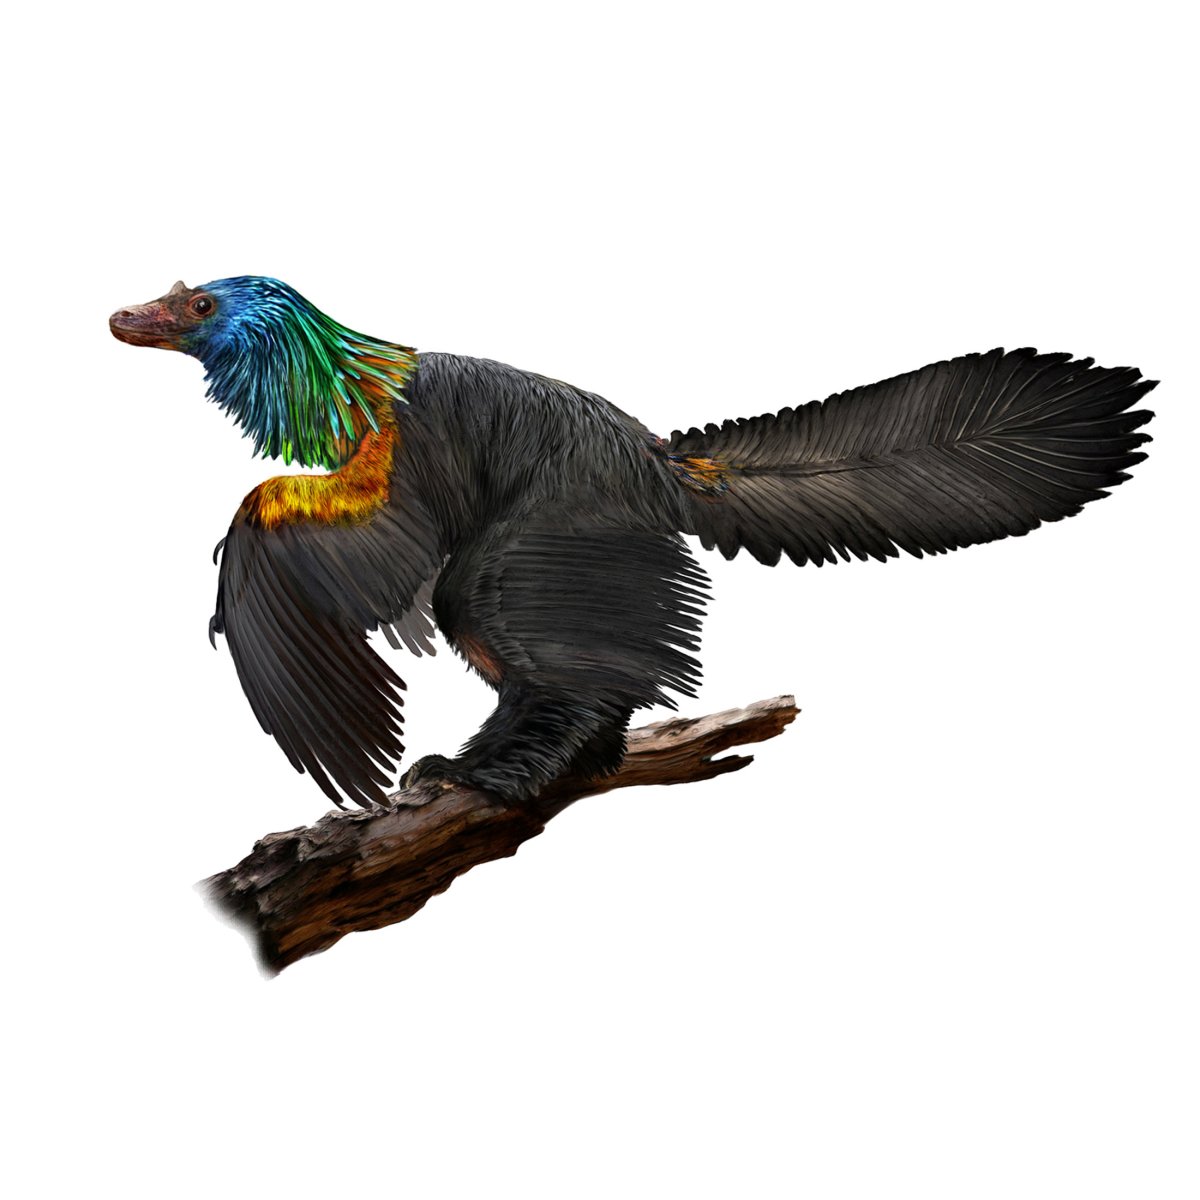 Chinese ‘rainbow dinosaur’ had iridescent feathers like hummingbirds